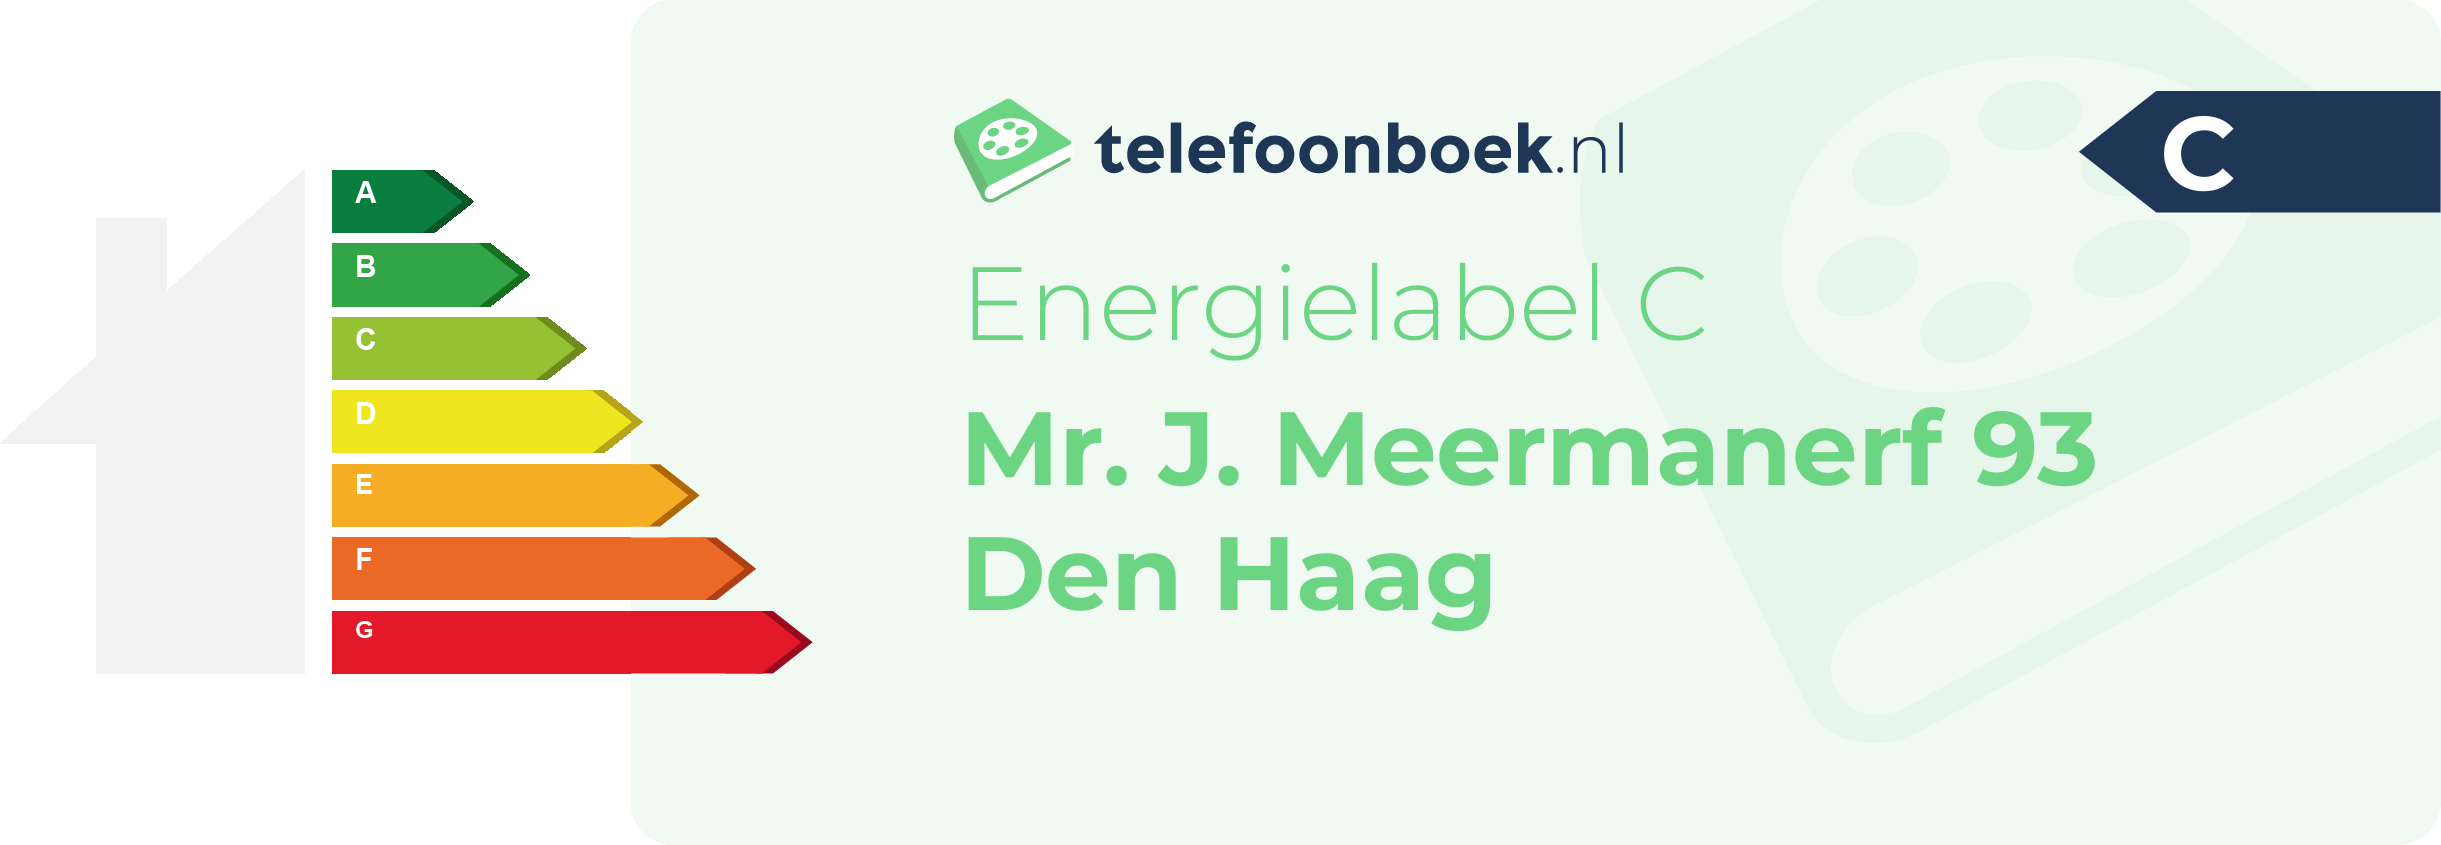 Energielabel Mr. J. Meermanerf 93 Den Haag